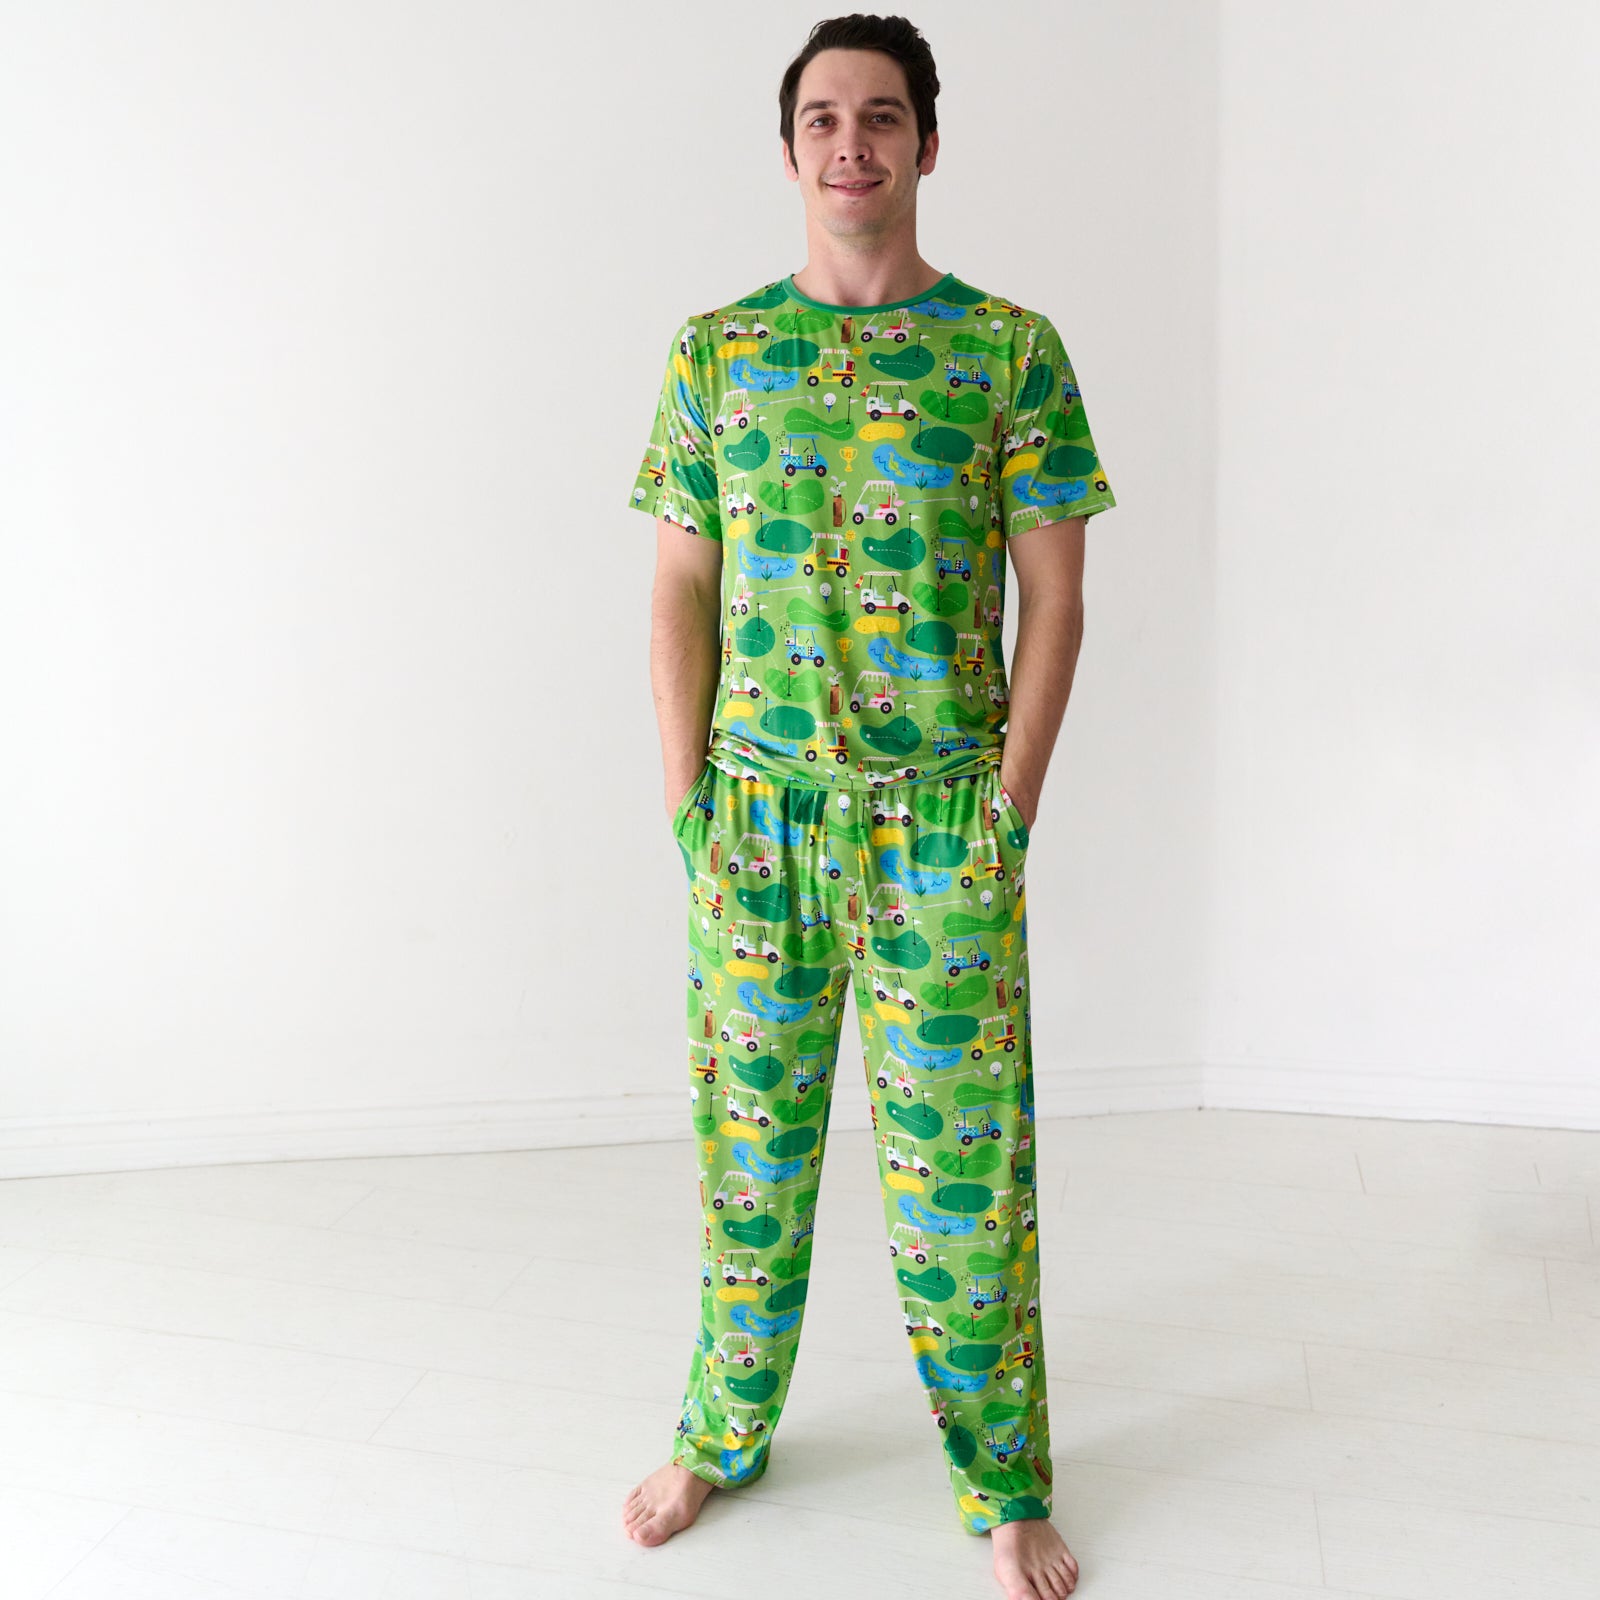 Man wearing a Fairway Fun men's short sleeve pajama top and matching pajama pants